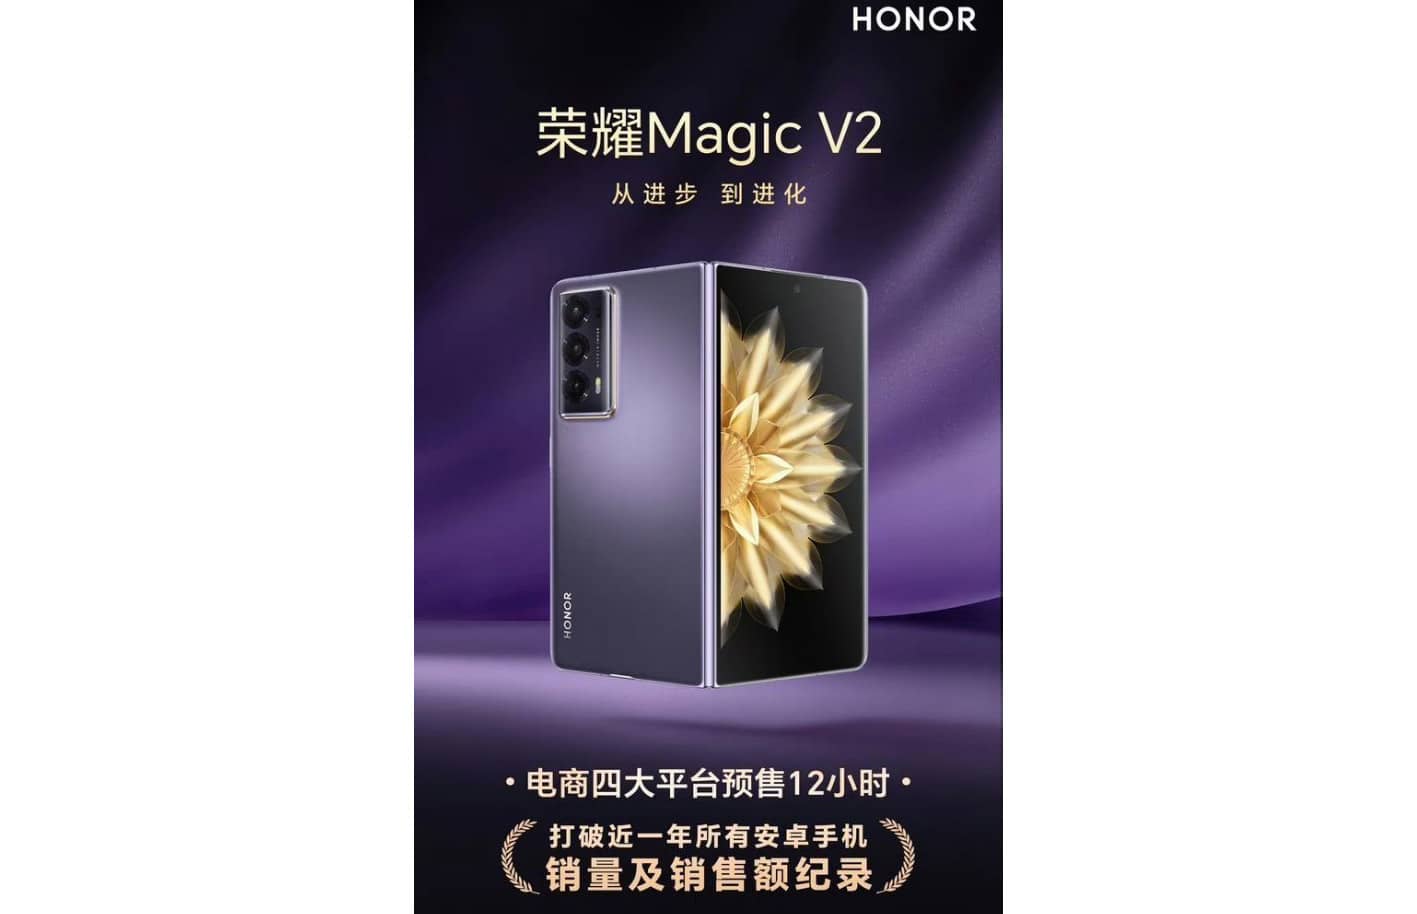 Honor Magic V2 побил все рекорды продаж Android-смартфонов за последний год